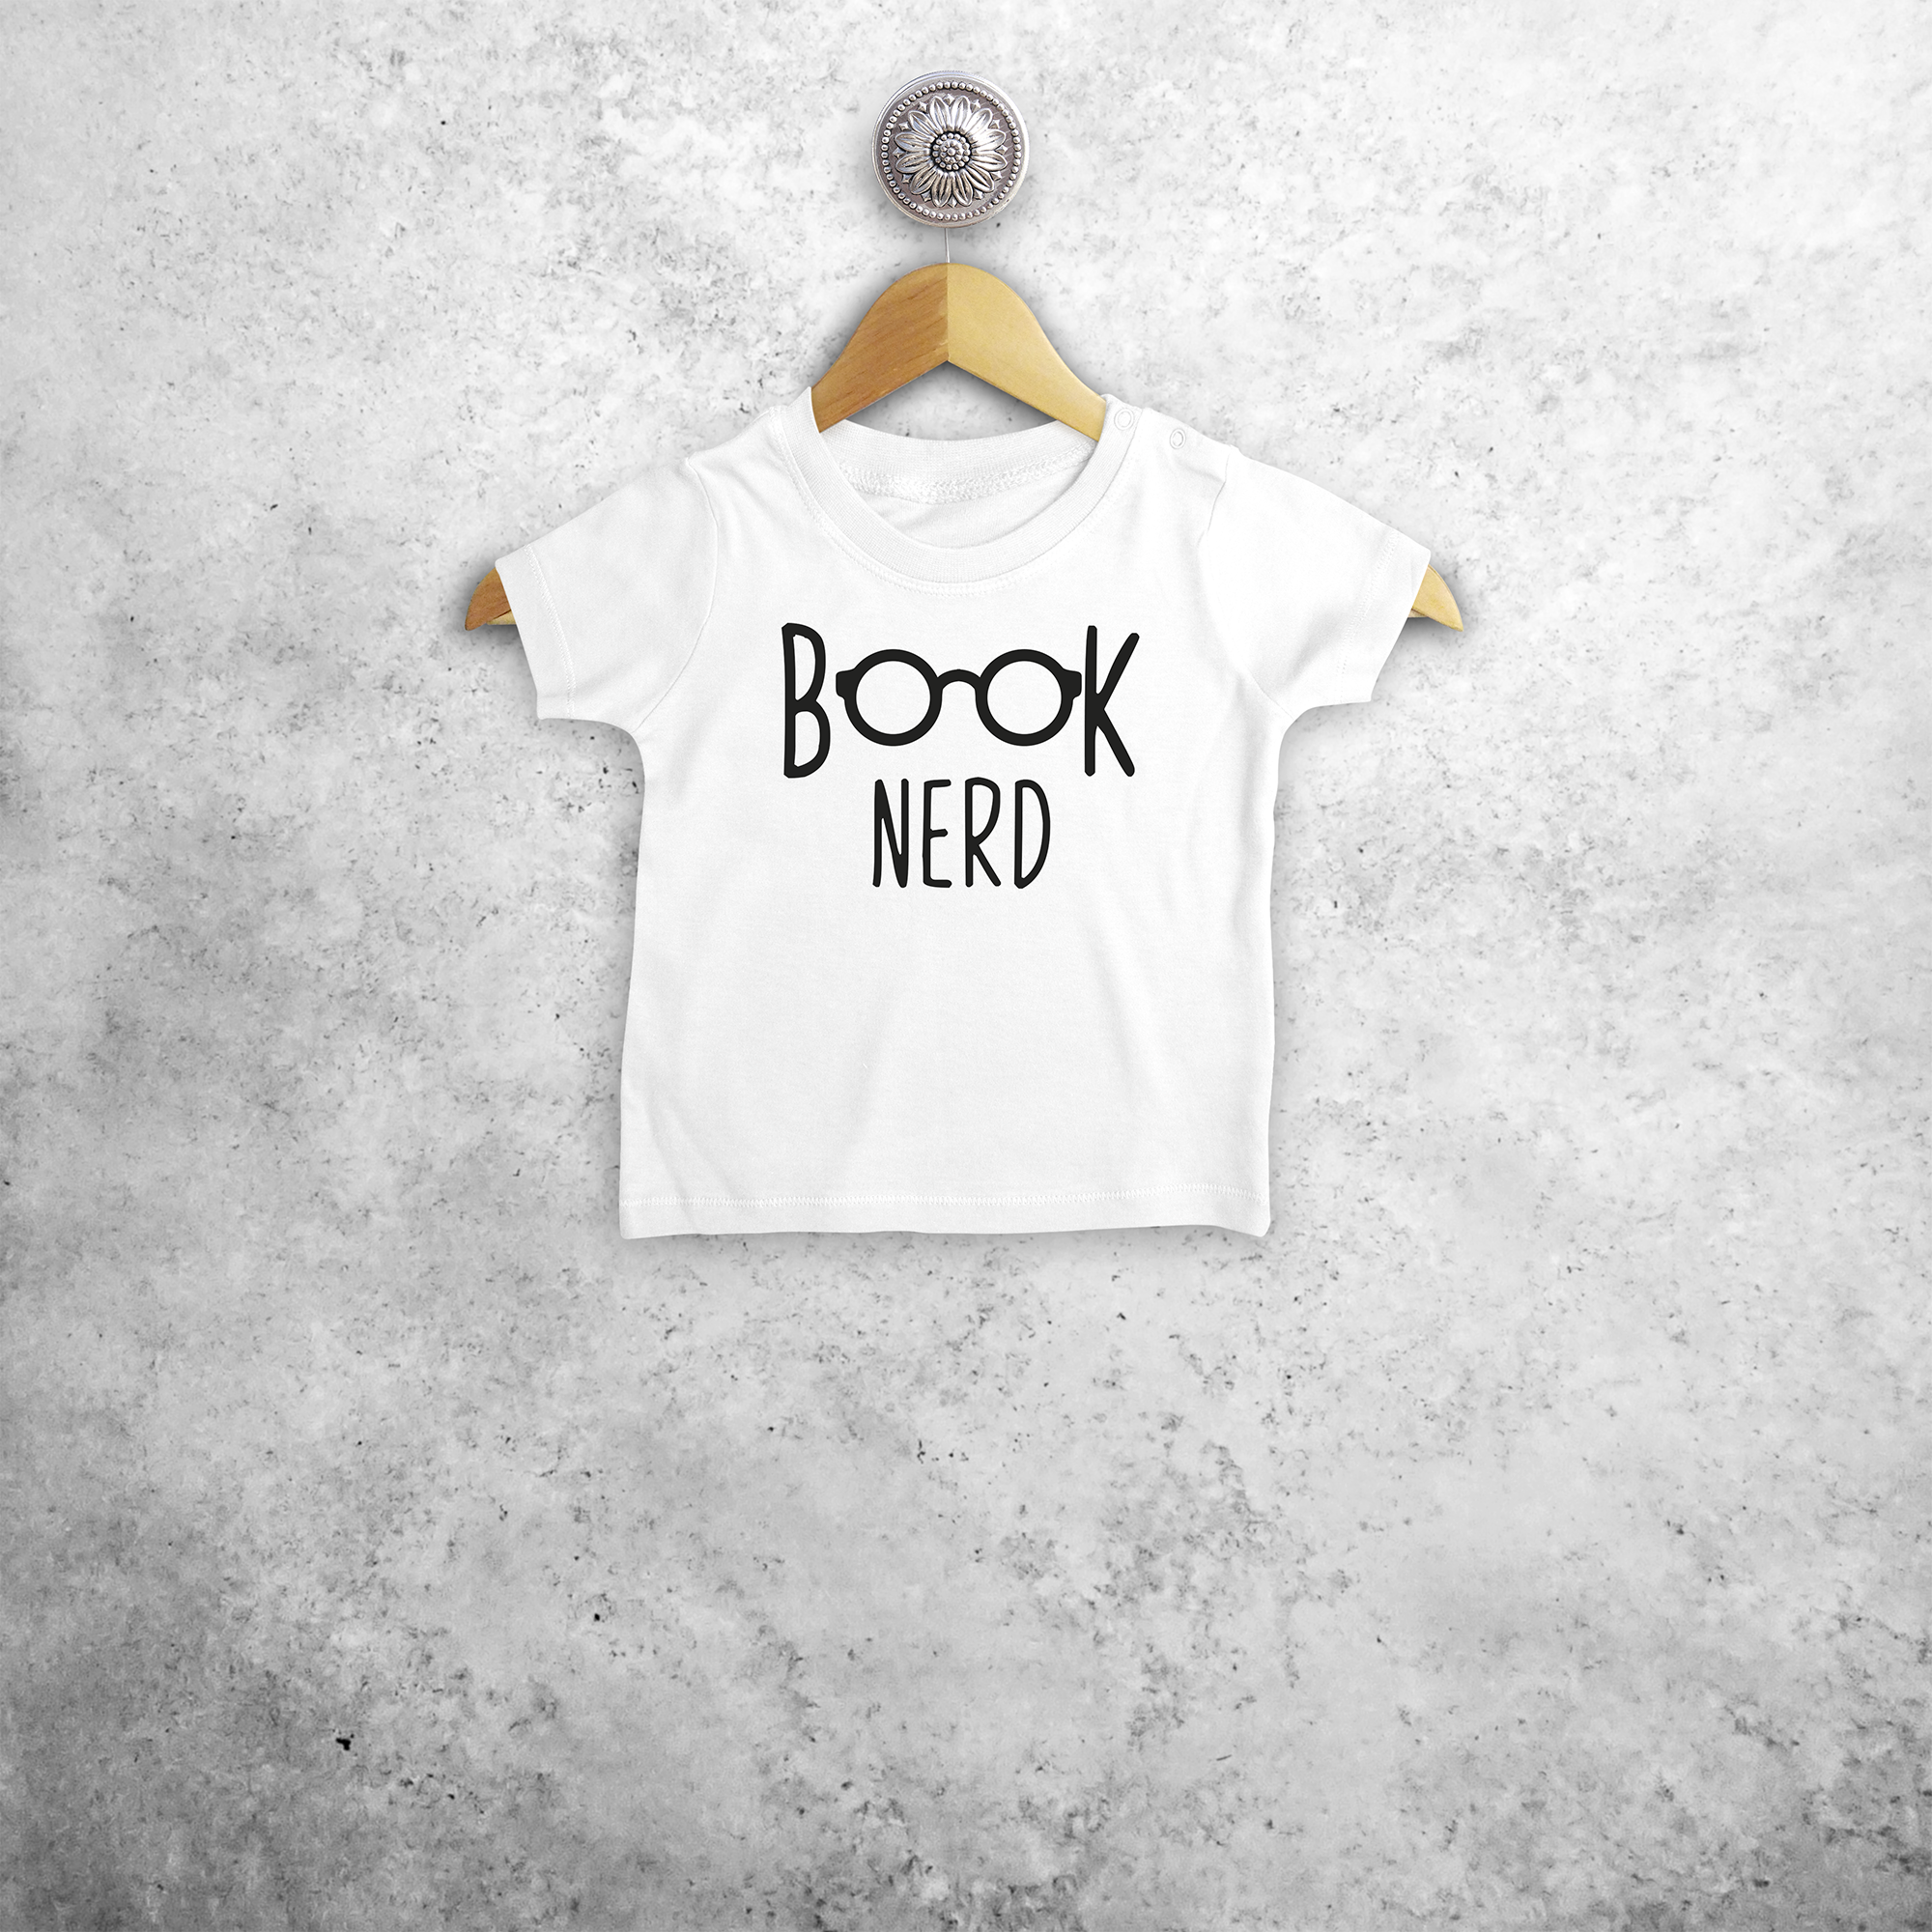 'Book nerd' baby shortsleeve shirt